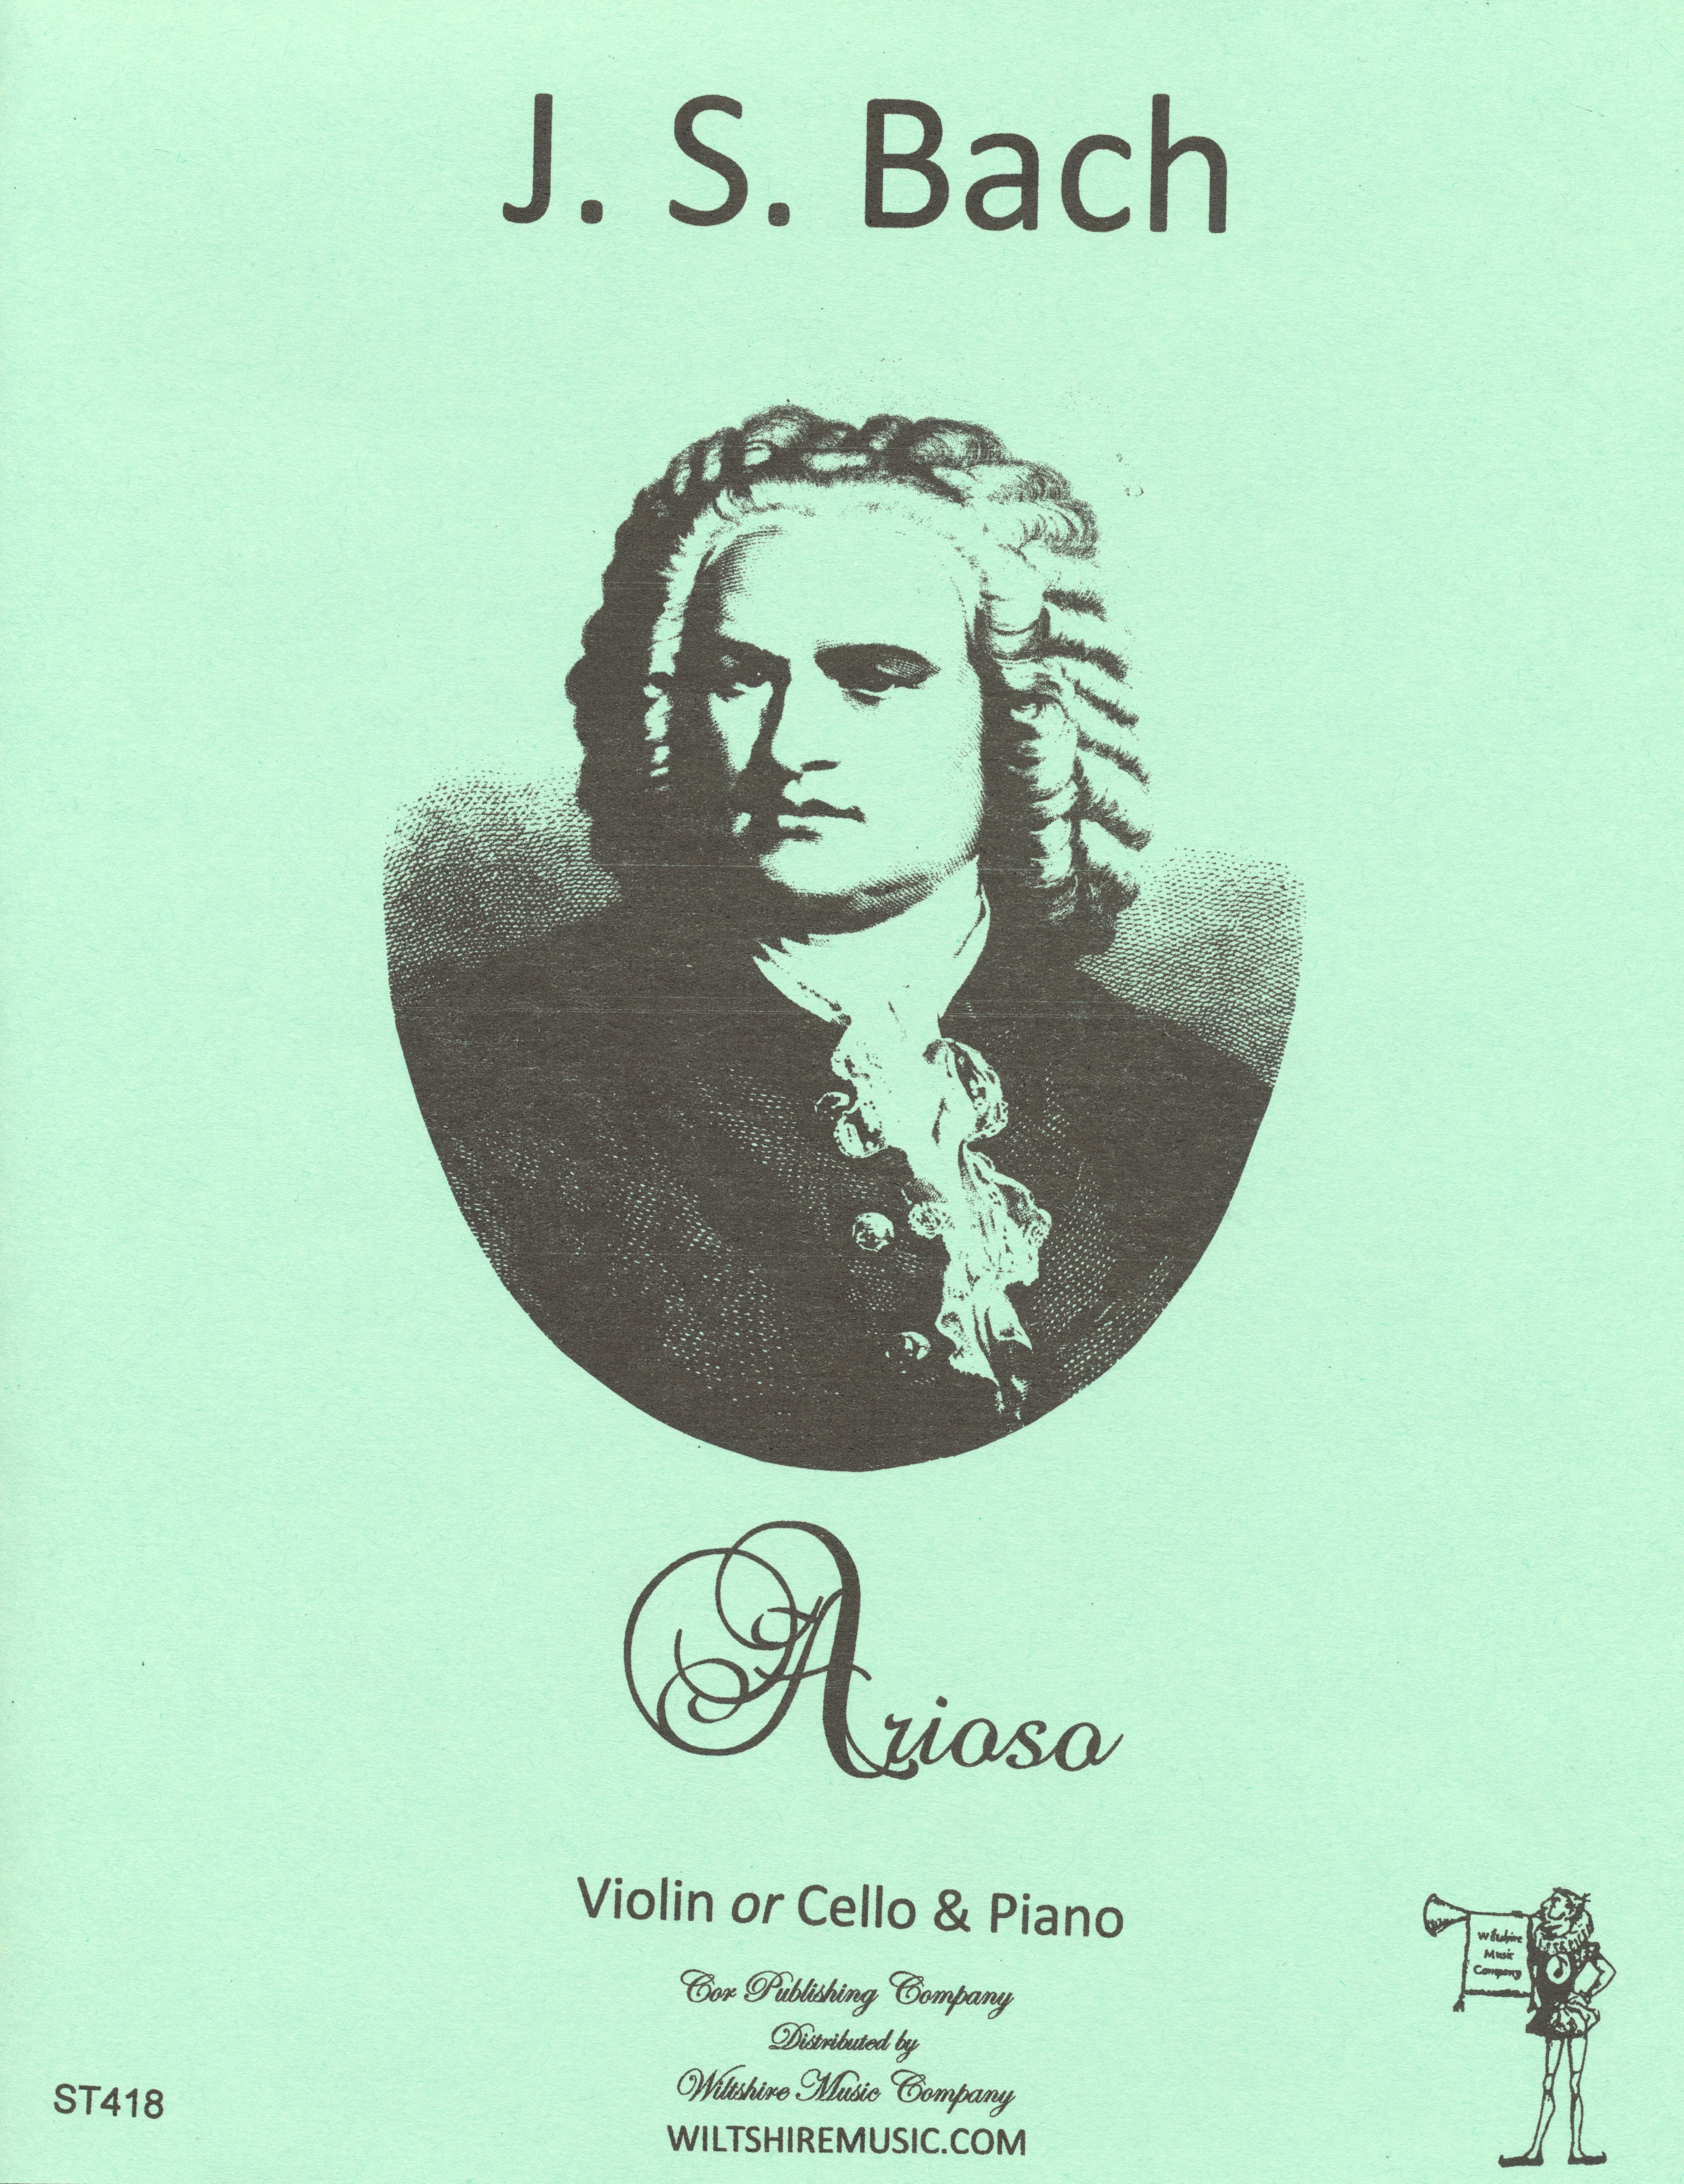 Arioso, J.S. Bach, violin or cello & piano